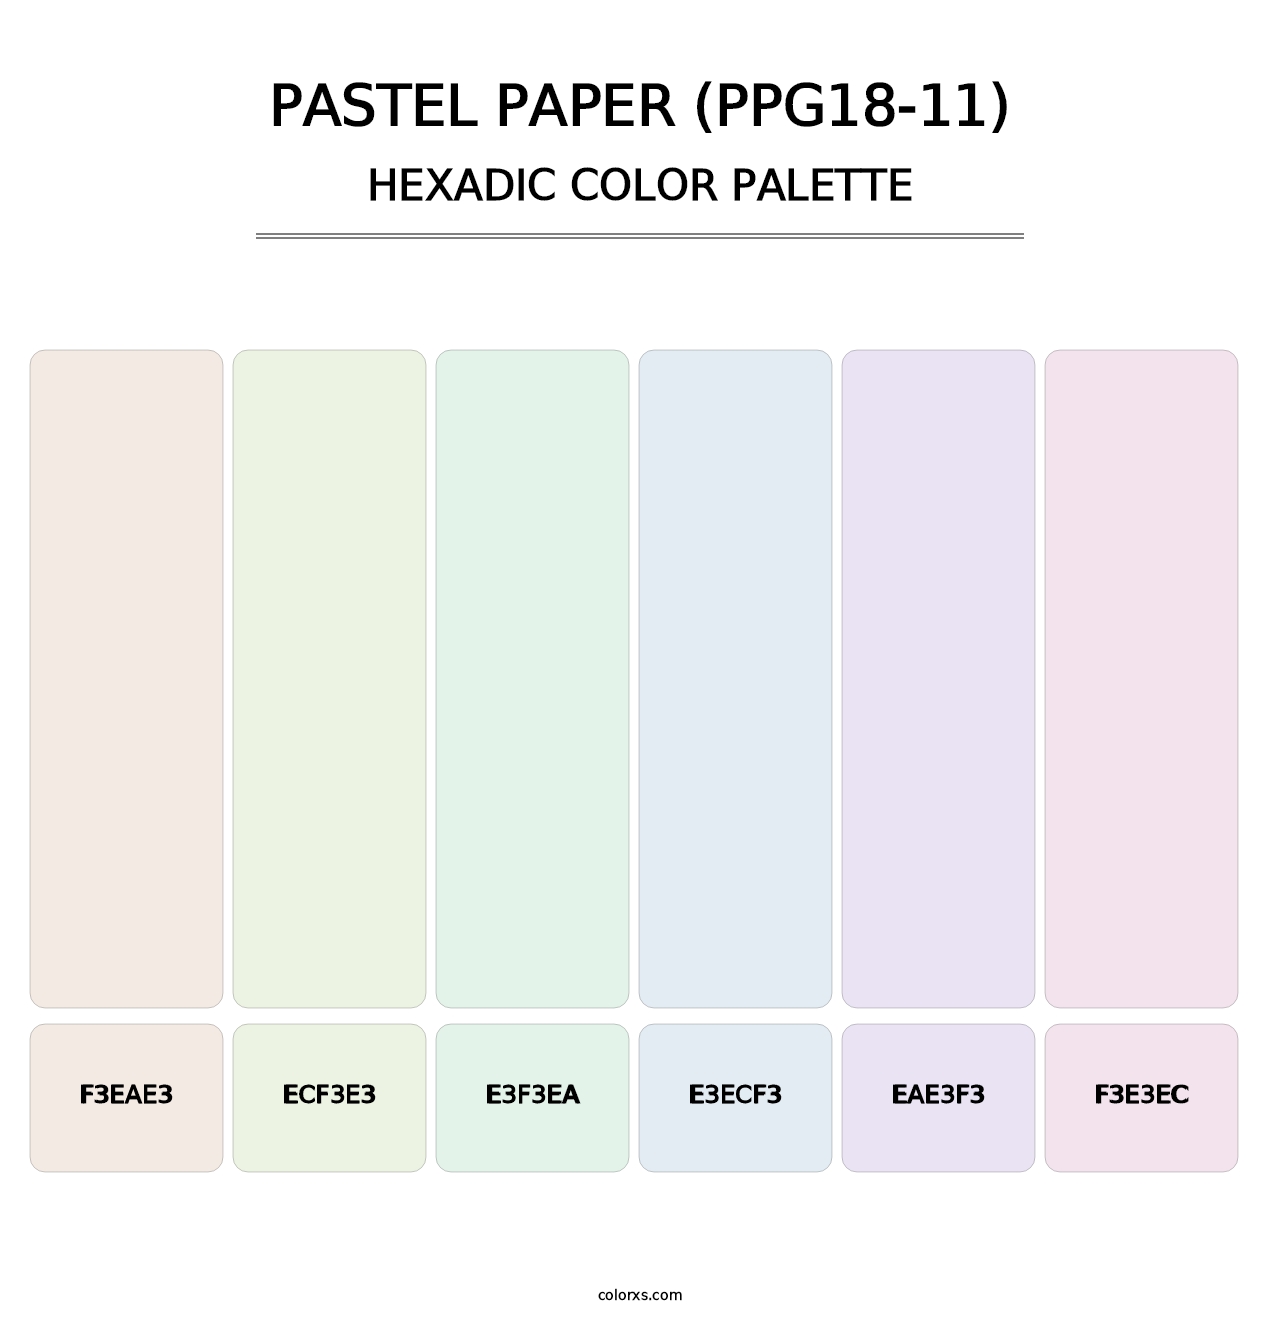 Pastel Paper (PPG18-11) - Hexadic Color Palette